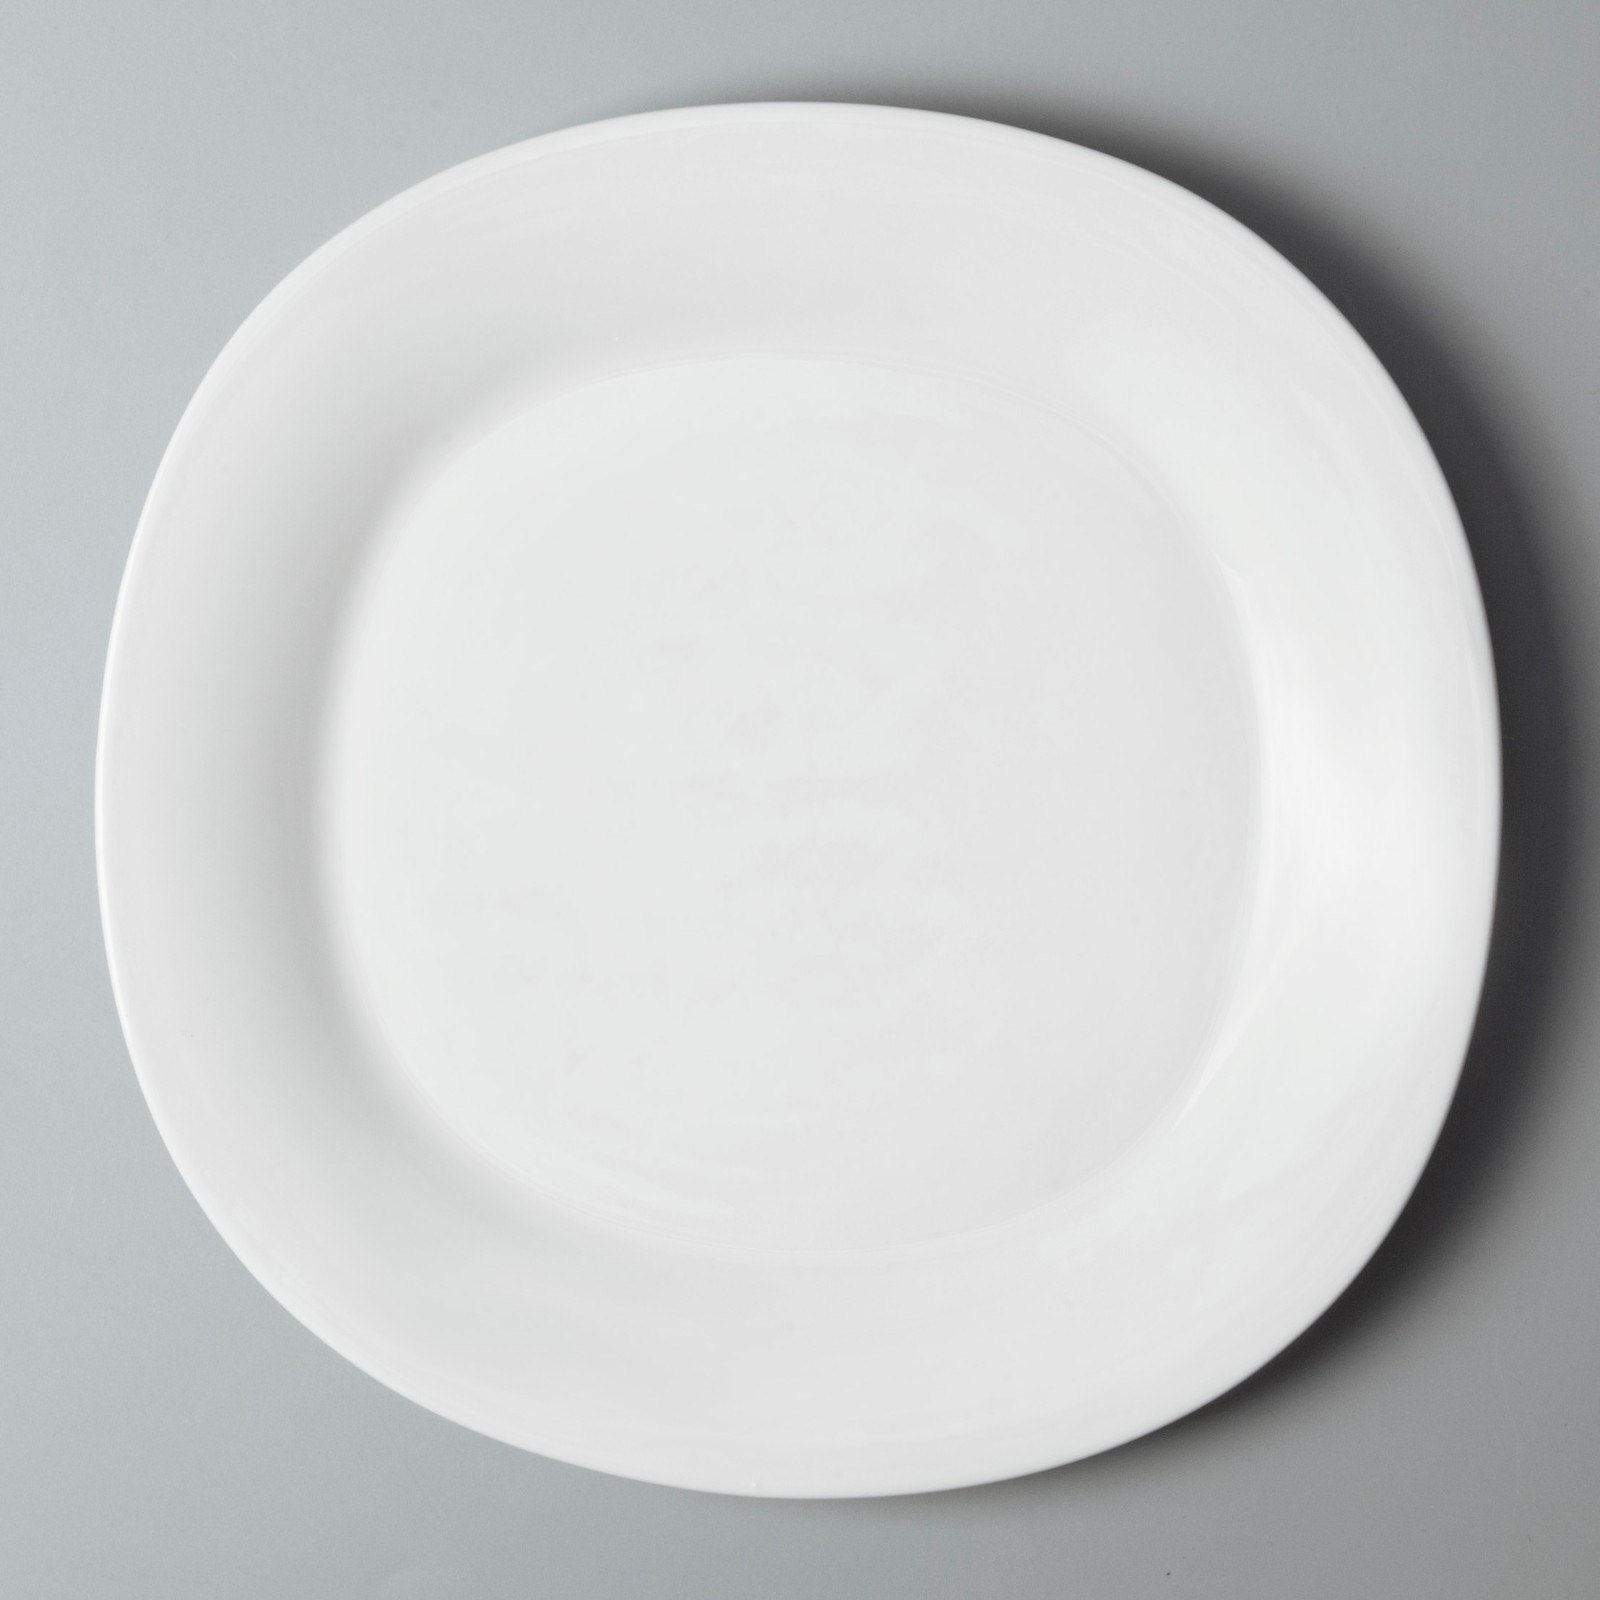 white white dinner sets Two Eight white porcelain tableware